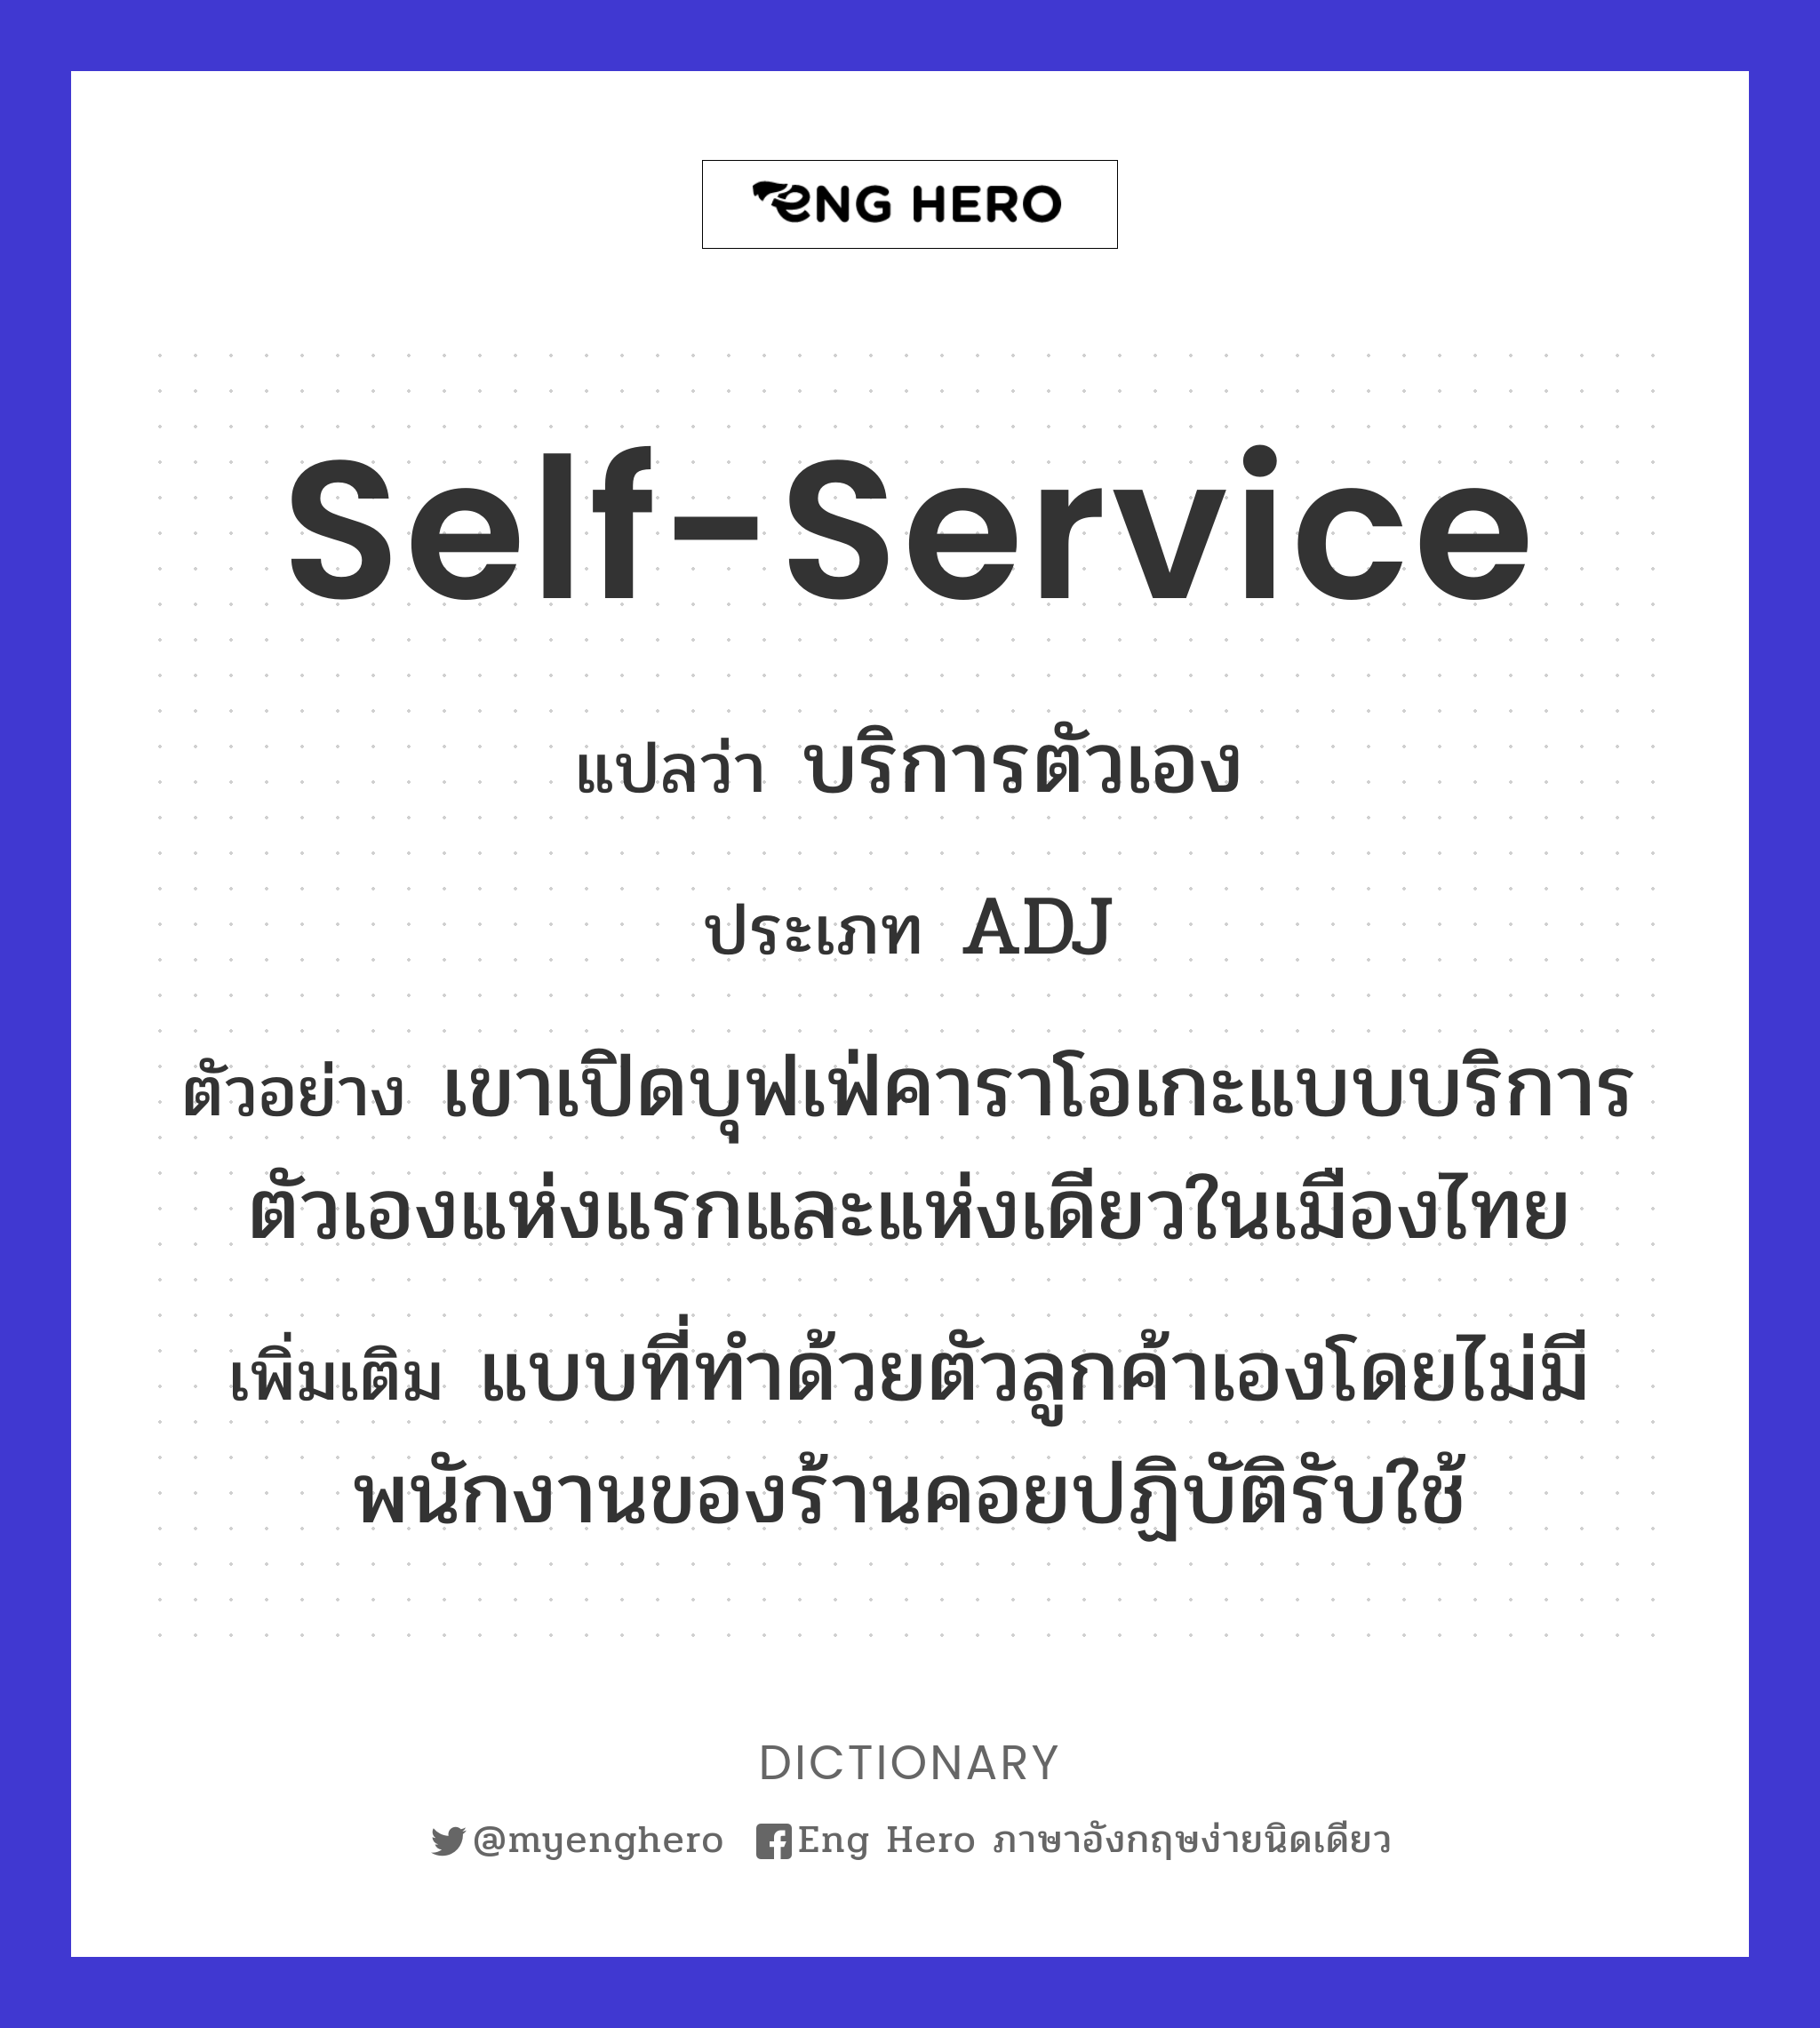 self-service